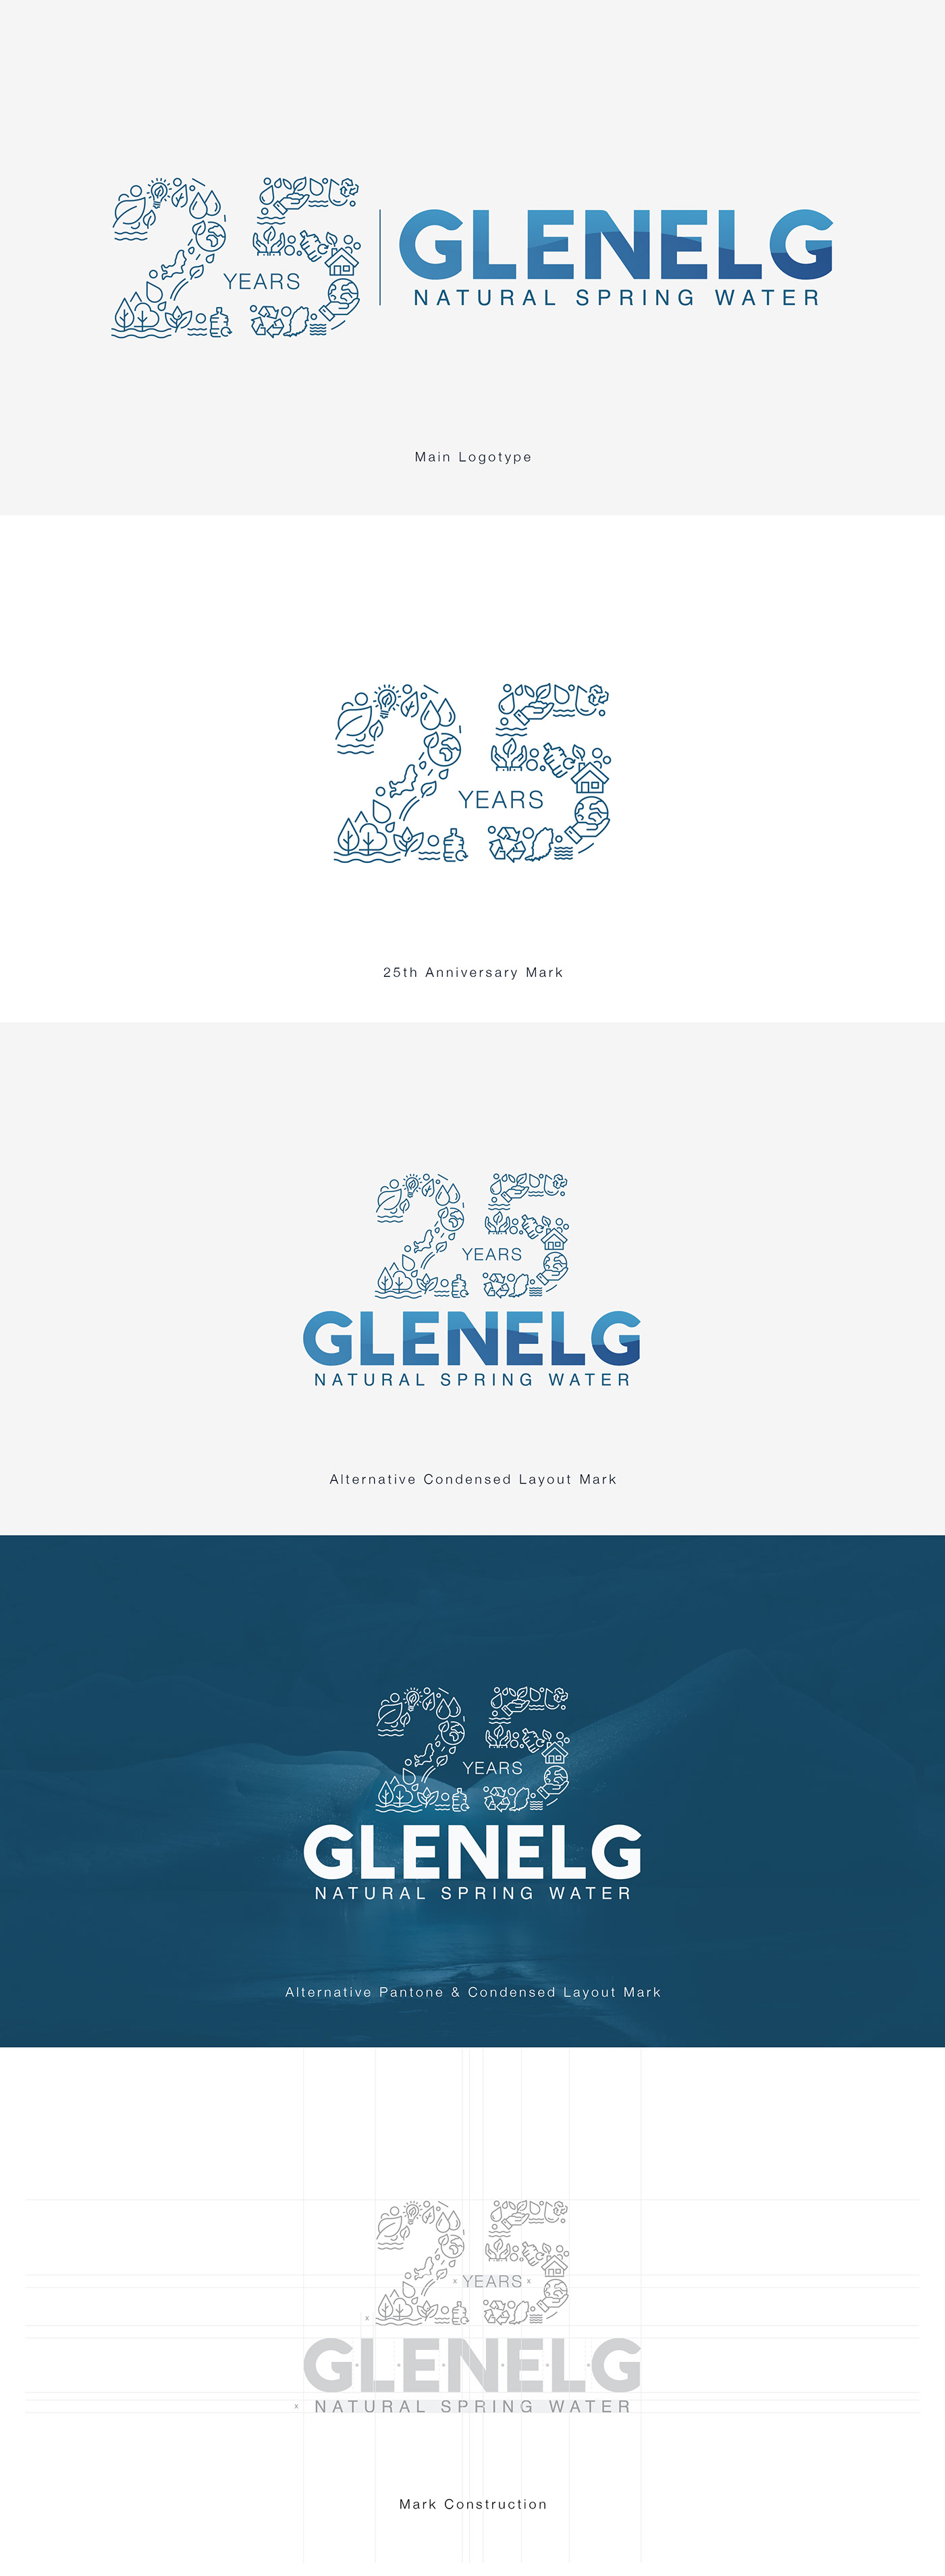 Glenelg Spring Water grenada water rebranding Caribbean bottle anniversary Island